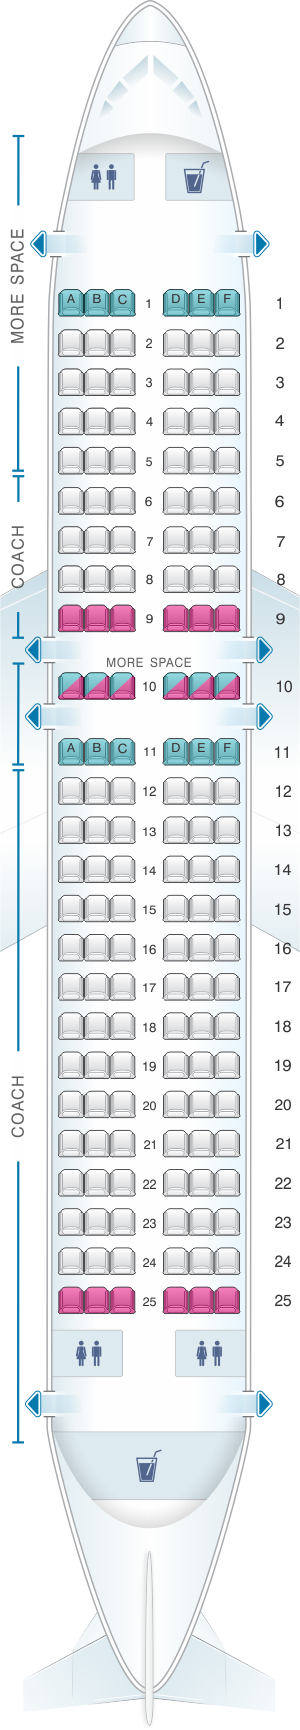 Jetblue Seat Map A321 Review Home Decor